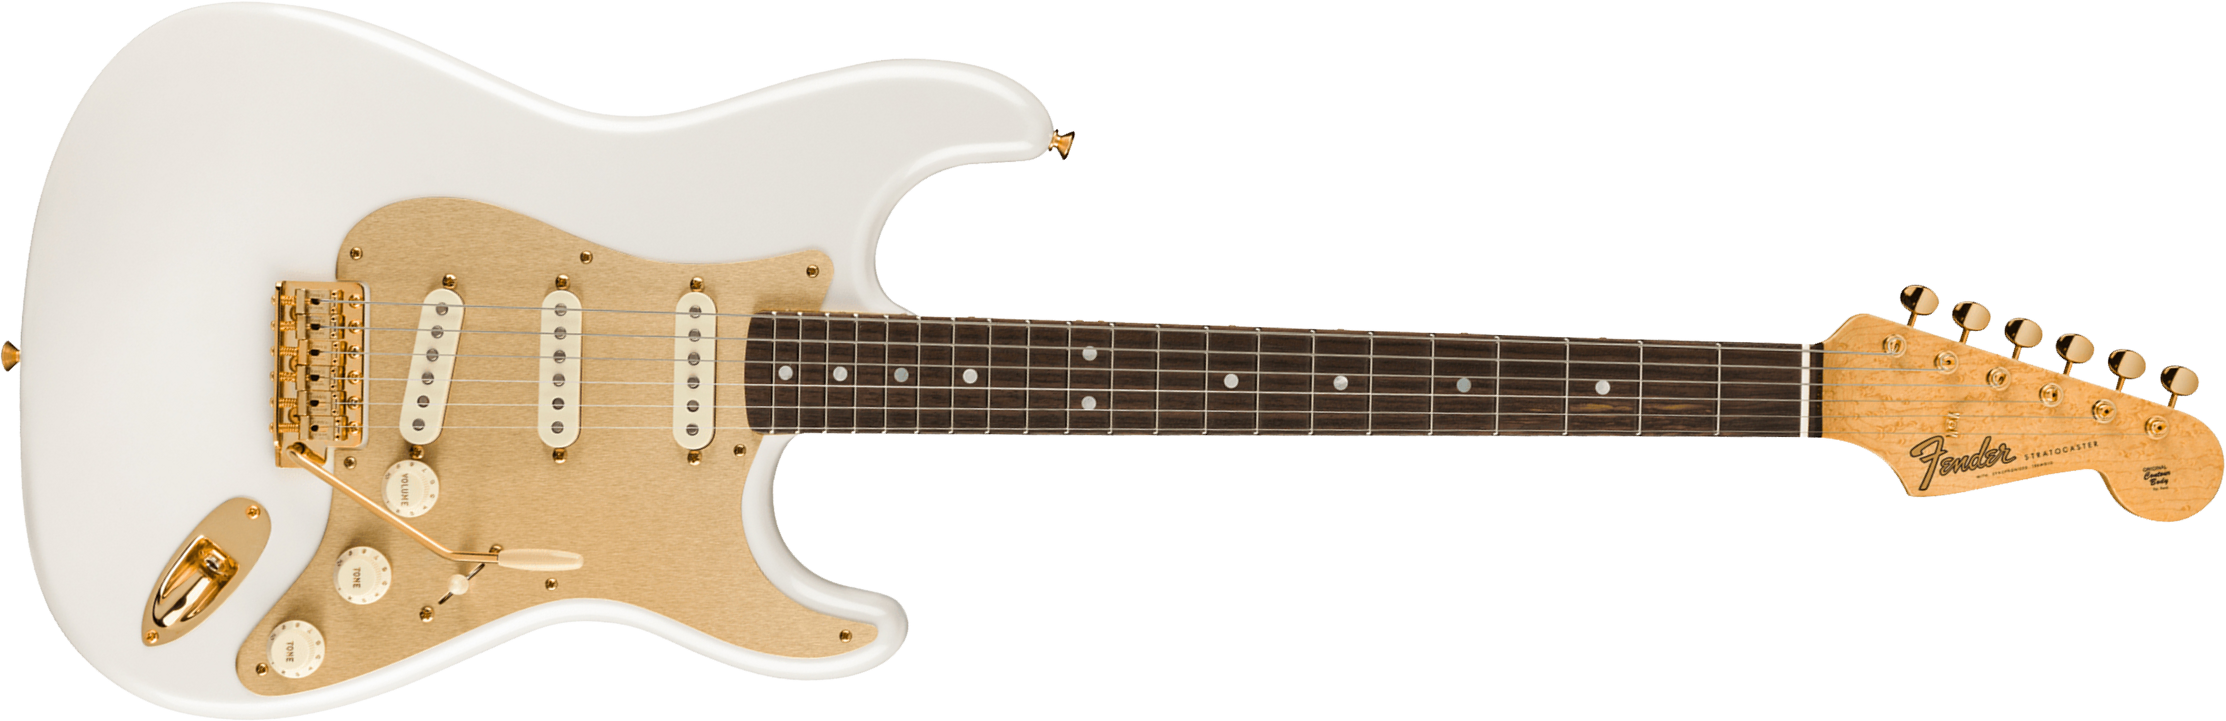 Fender Custom Shop Strat 75th Anniversary Ltd Rw - Nos Diamond White Pearl - Guitare Électrique Forme Str - Main picture